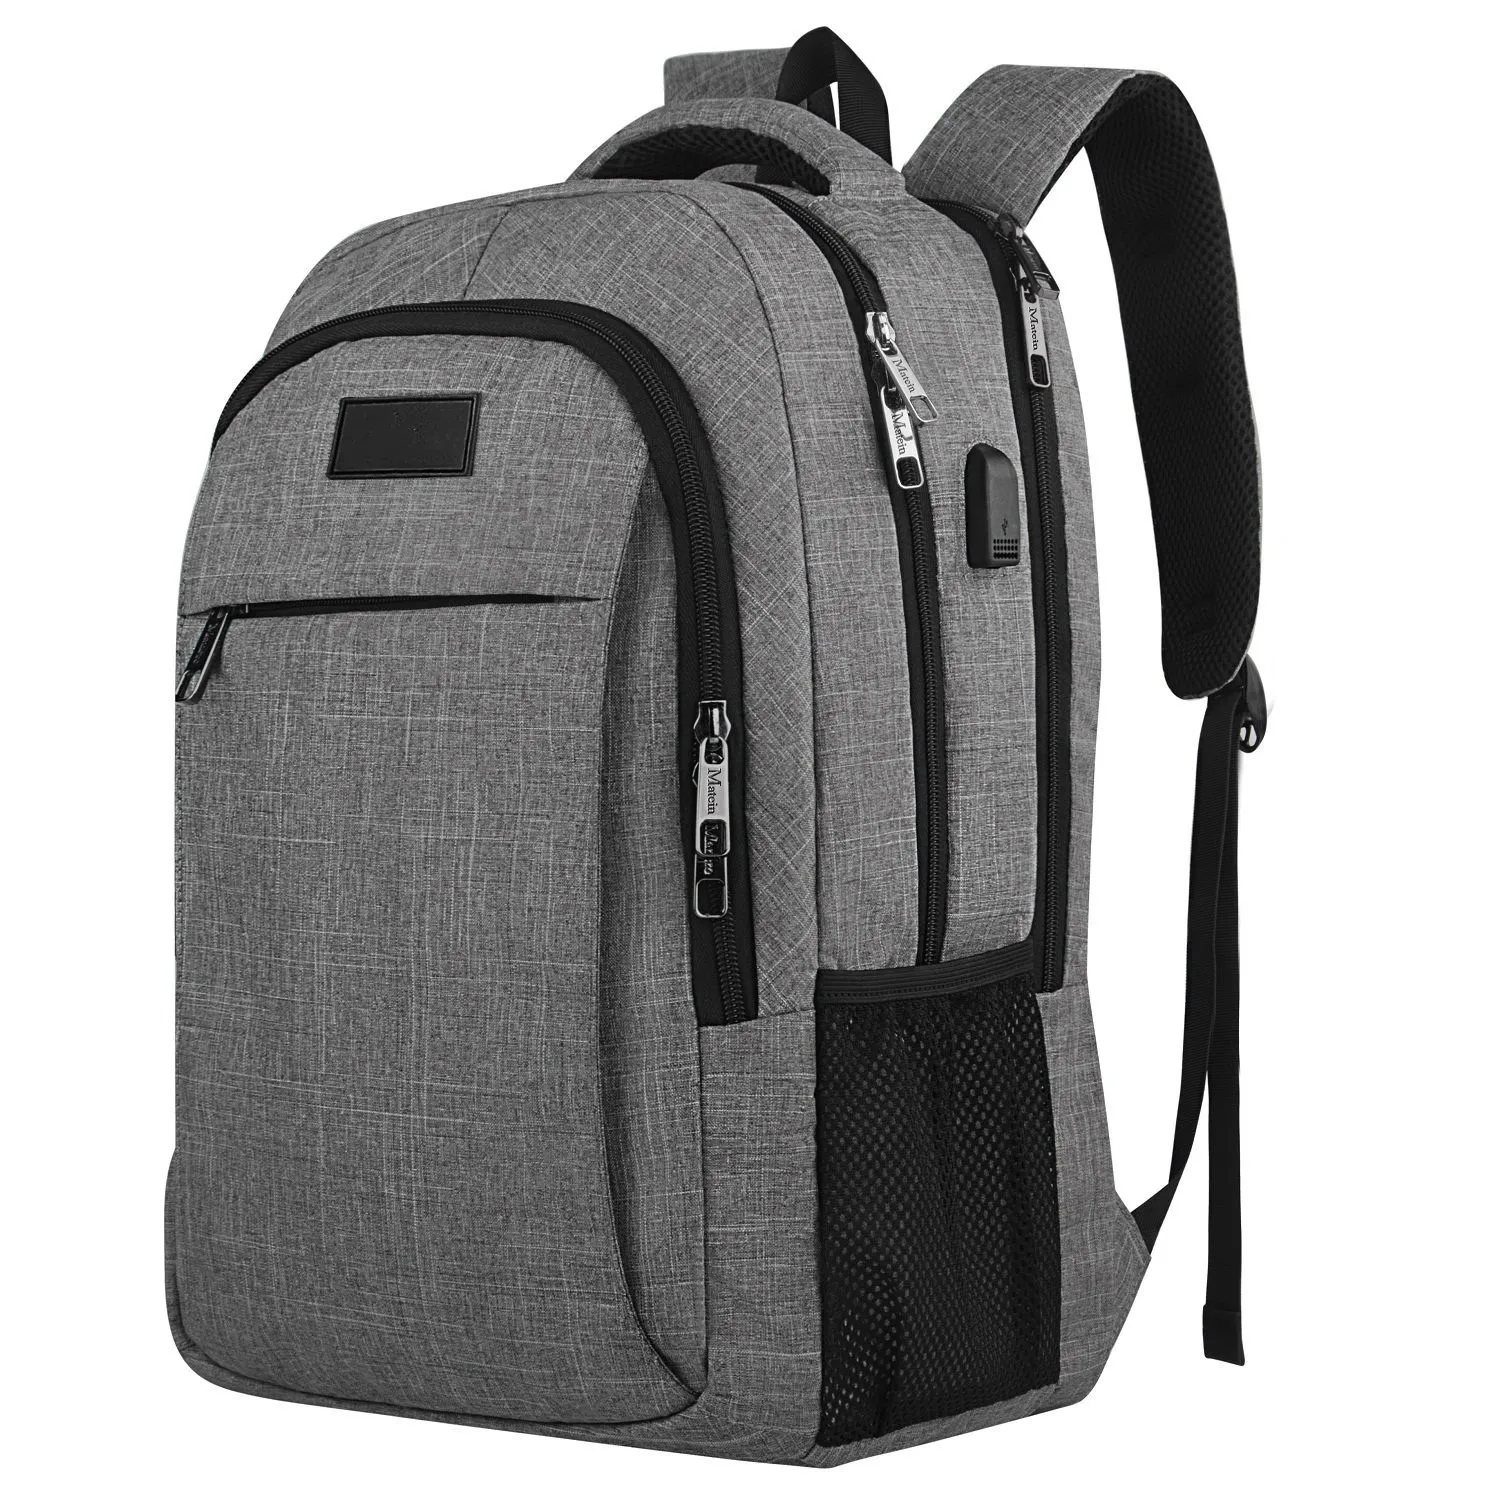 School bags for boys student school cool backpack men travel bags rucksack  male waterproof laptop backpack usb bag boy gift